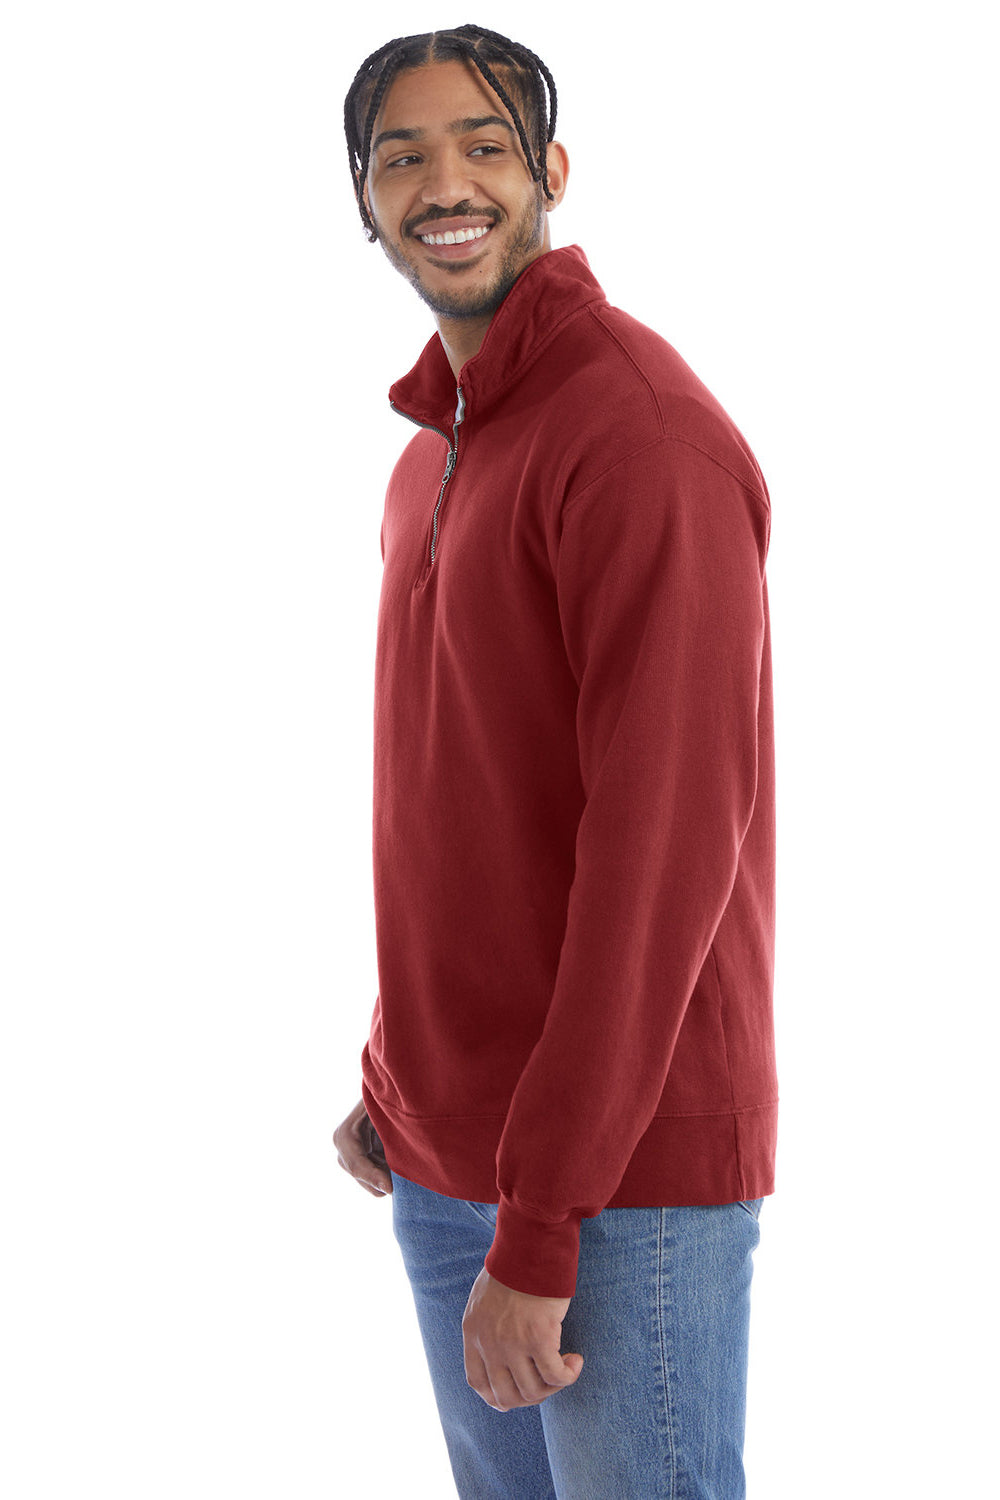 ComfortWash by Hanes GDH425 Mens 1/4 Zip Sweatshirt Cayenne Red 3Q